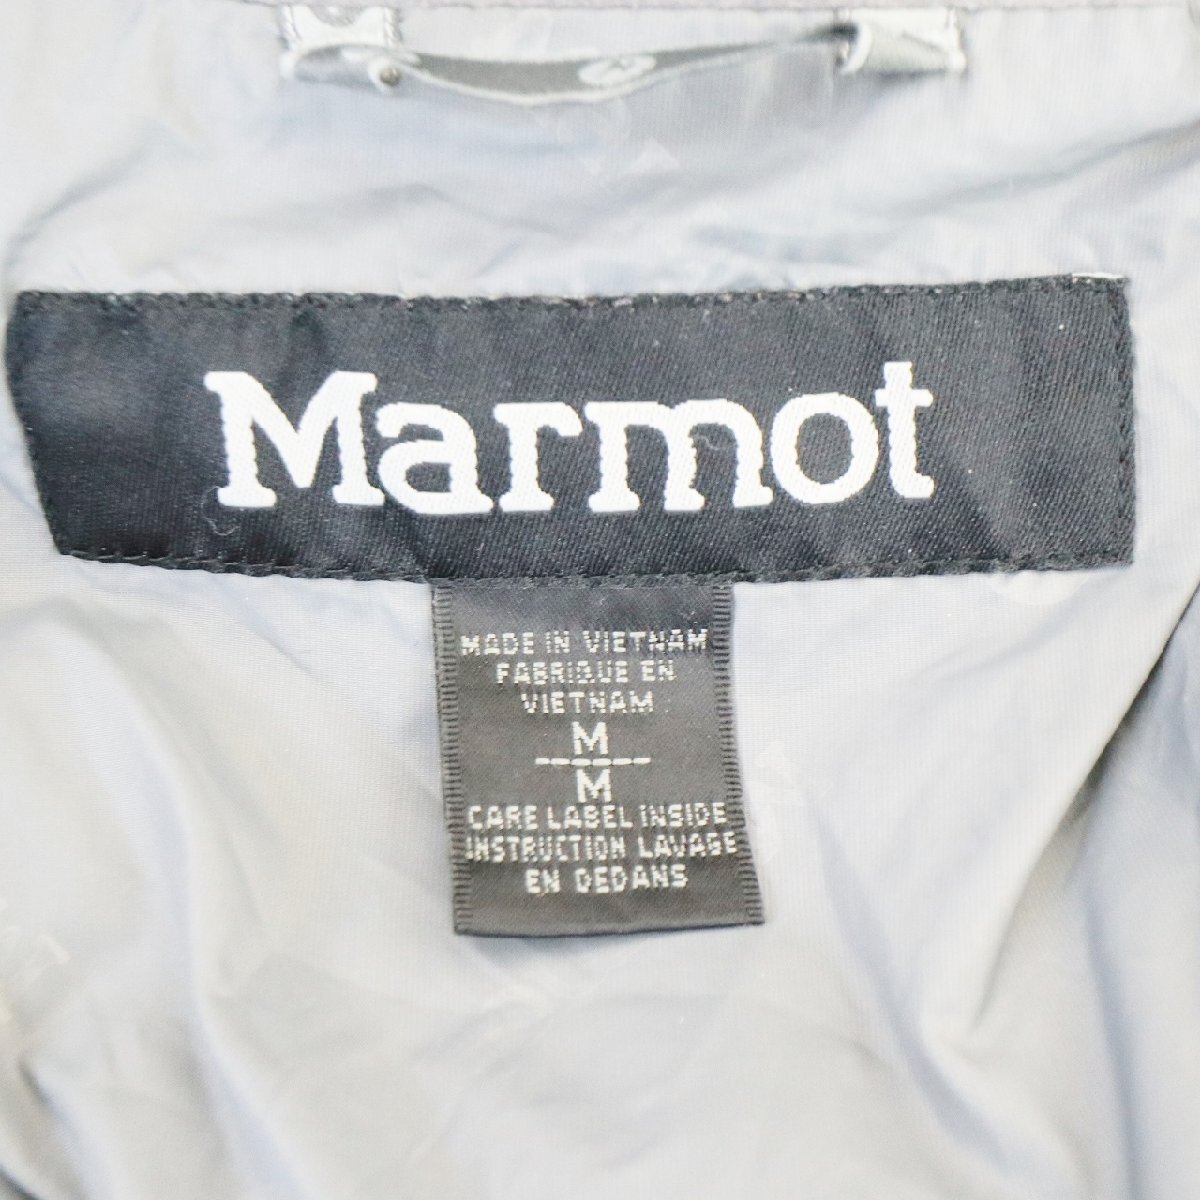 Marmot Marmot nylon jacket mountain parka outdoor camp protection against cold black ( men's M ) N1031 1 jpy start 